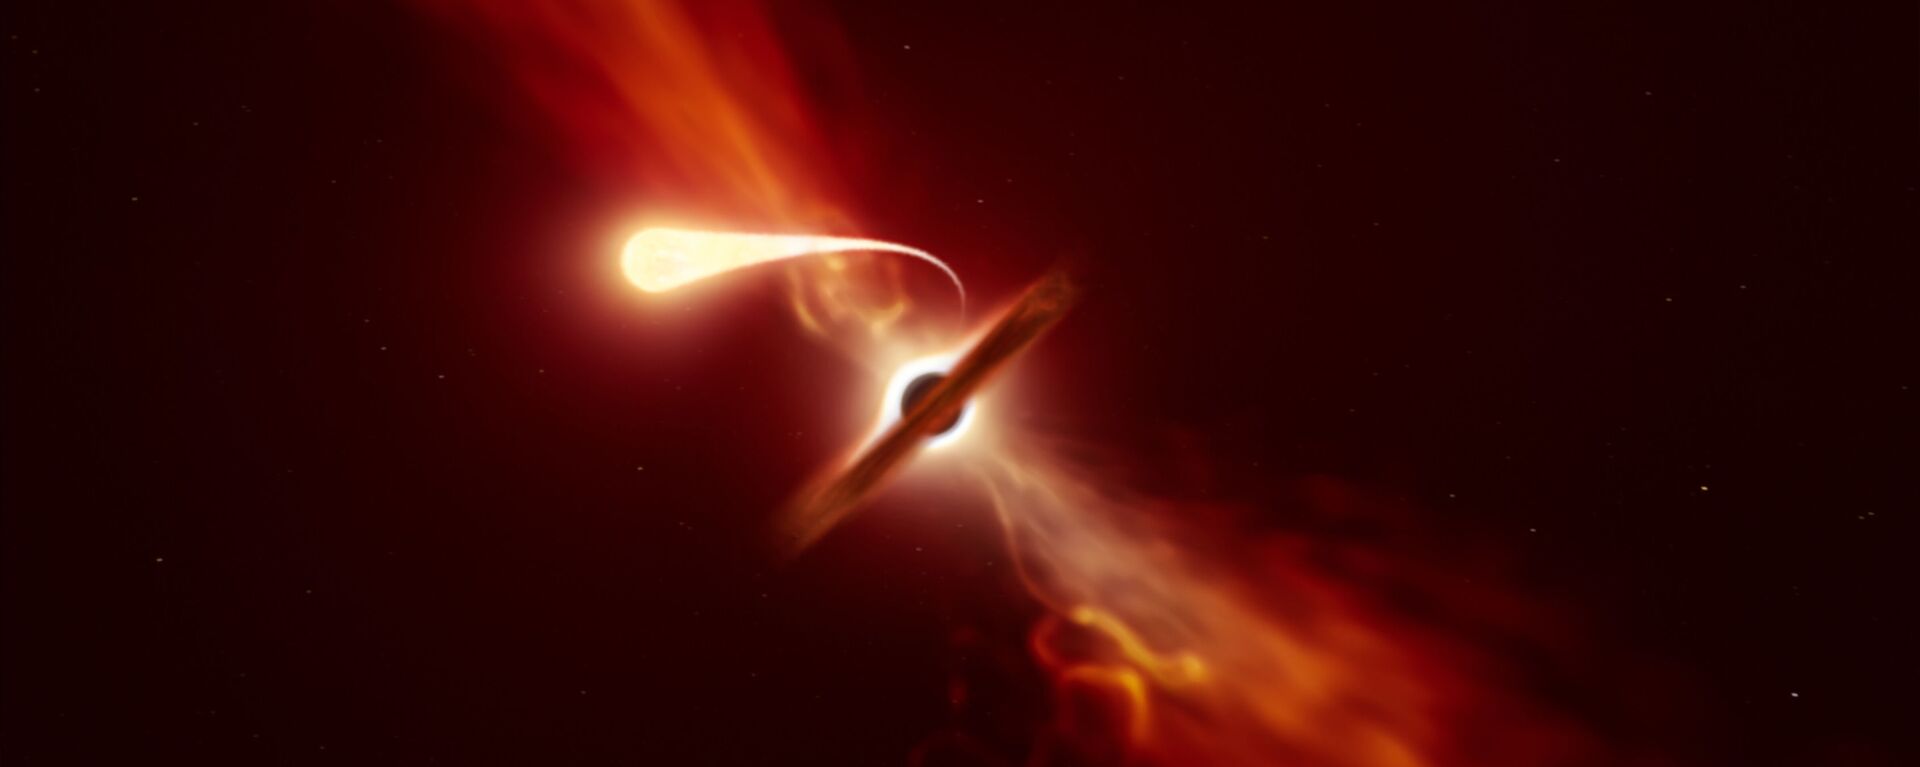 Imagen ilustrativa de un agujero negro supermasivo que devora a una estrella - Sputnik Mundo, 1920, 05.07.2021